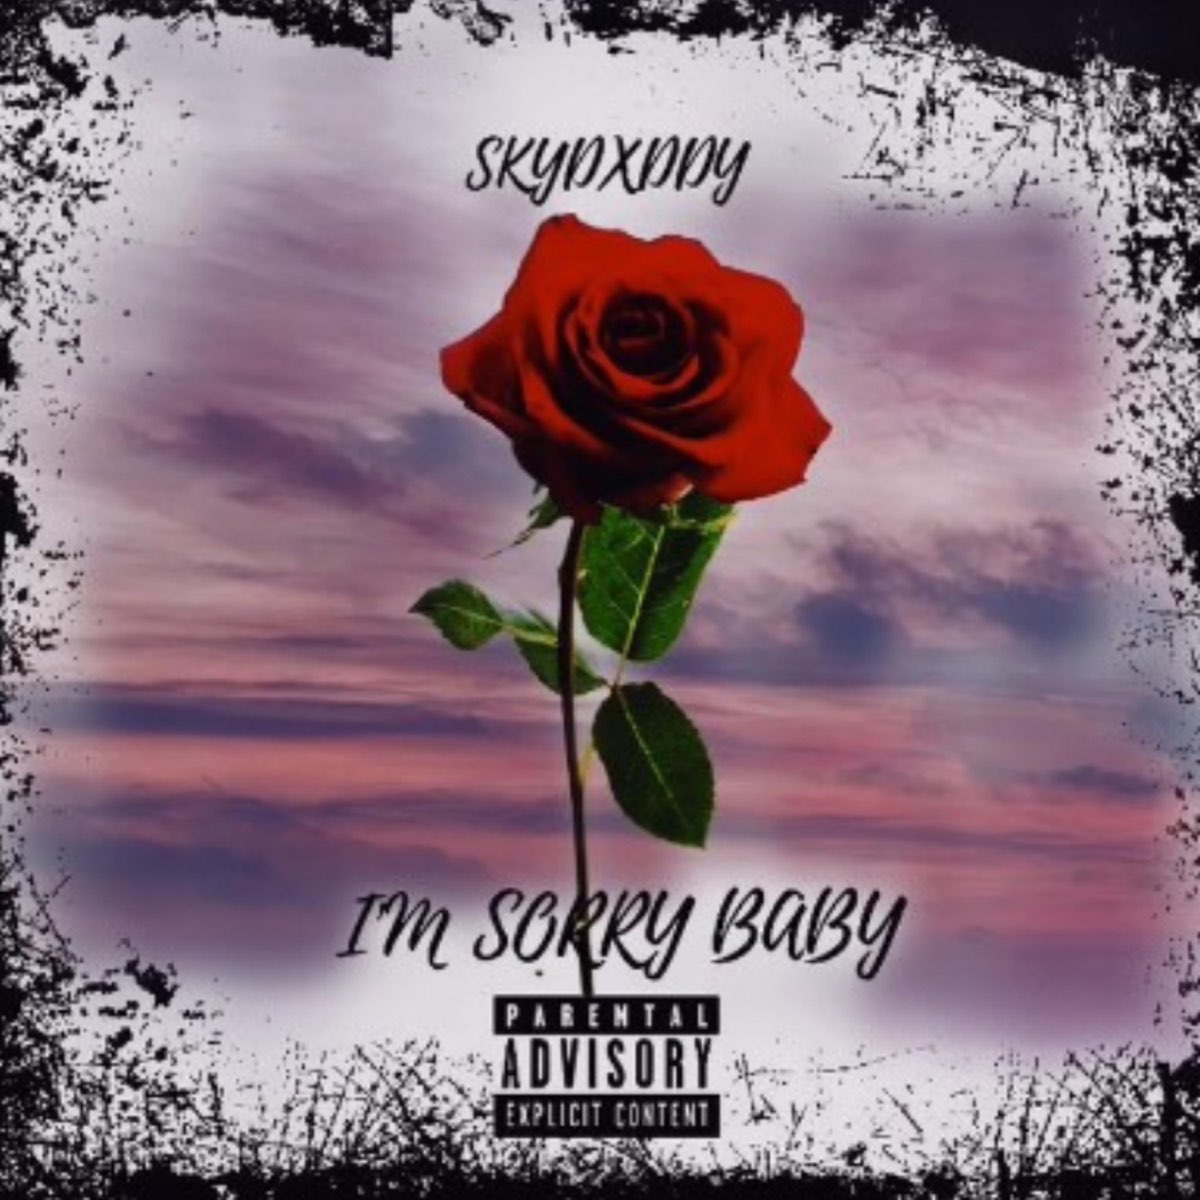 I'm Sorry Baby - Single by SkyDxddy on Apple Music